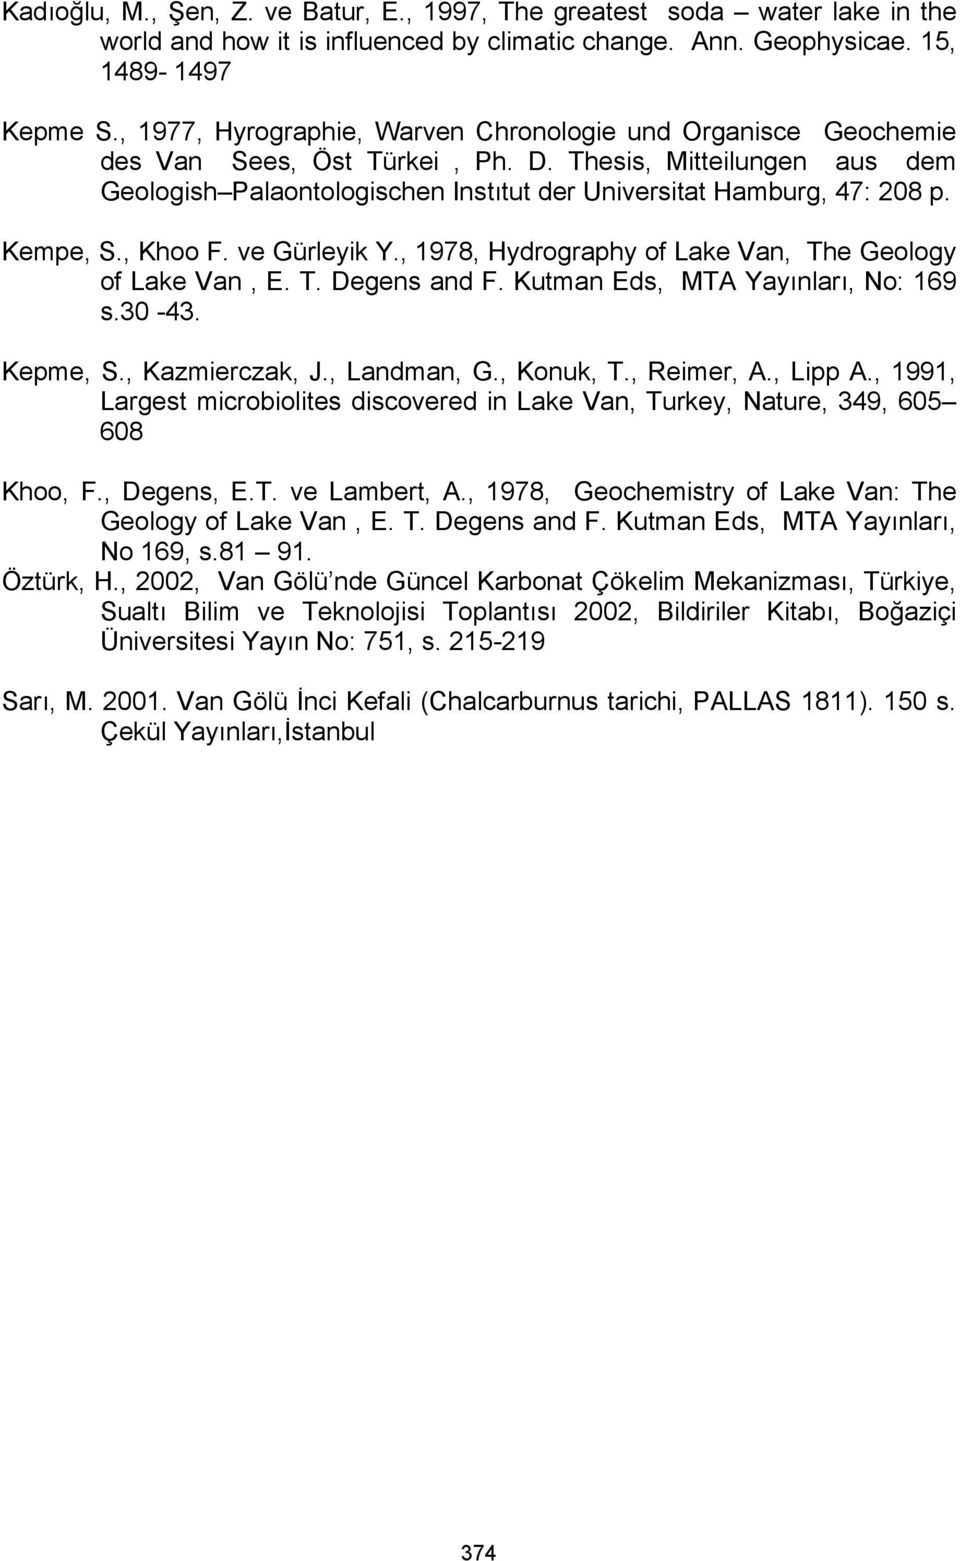 Kempe, S., Khoo F. ve Gürleyik Y., 1978, Hydrography of Lake Van, The Geology of Lake Van, E. T. Degens and F. Kutman Eds, MTA Yayınları, No: 169 s.30-43. Kepme, S., Kazmierczak, J., Landman, G.